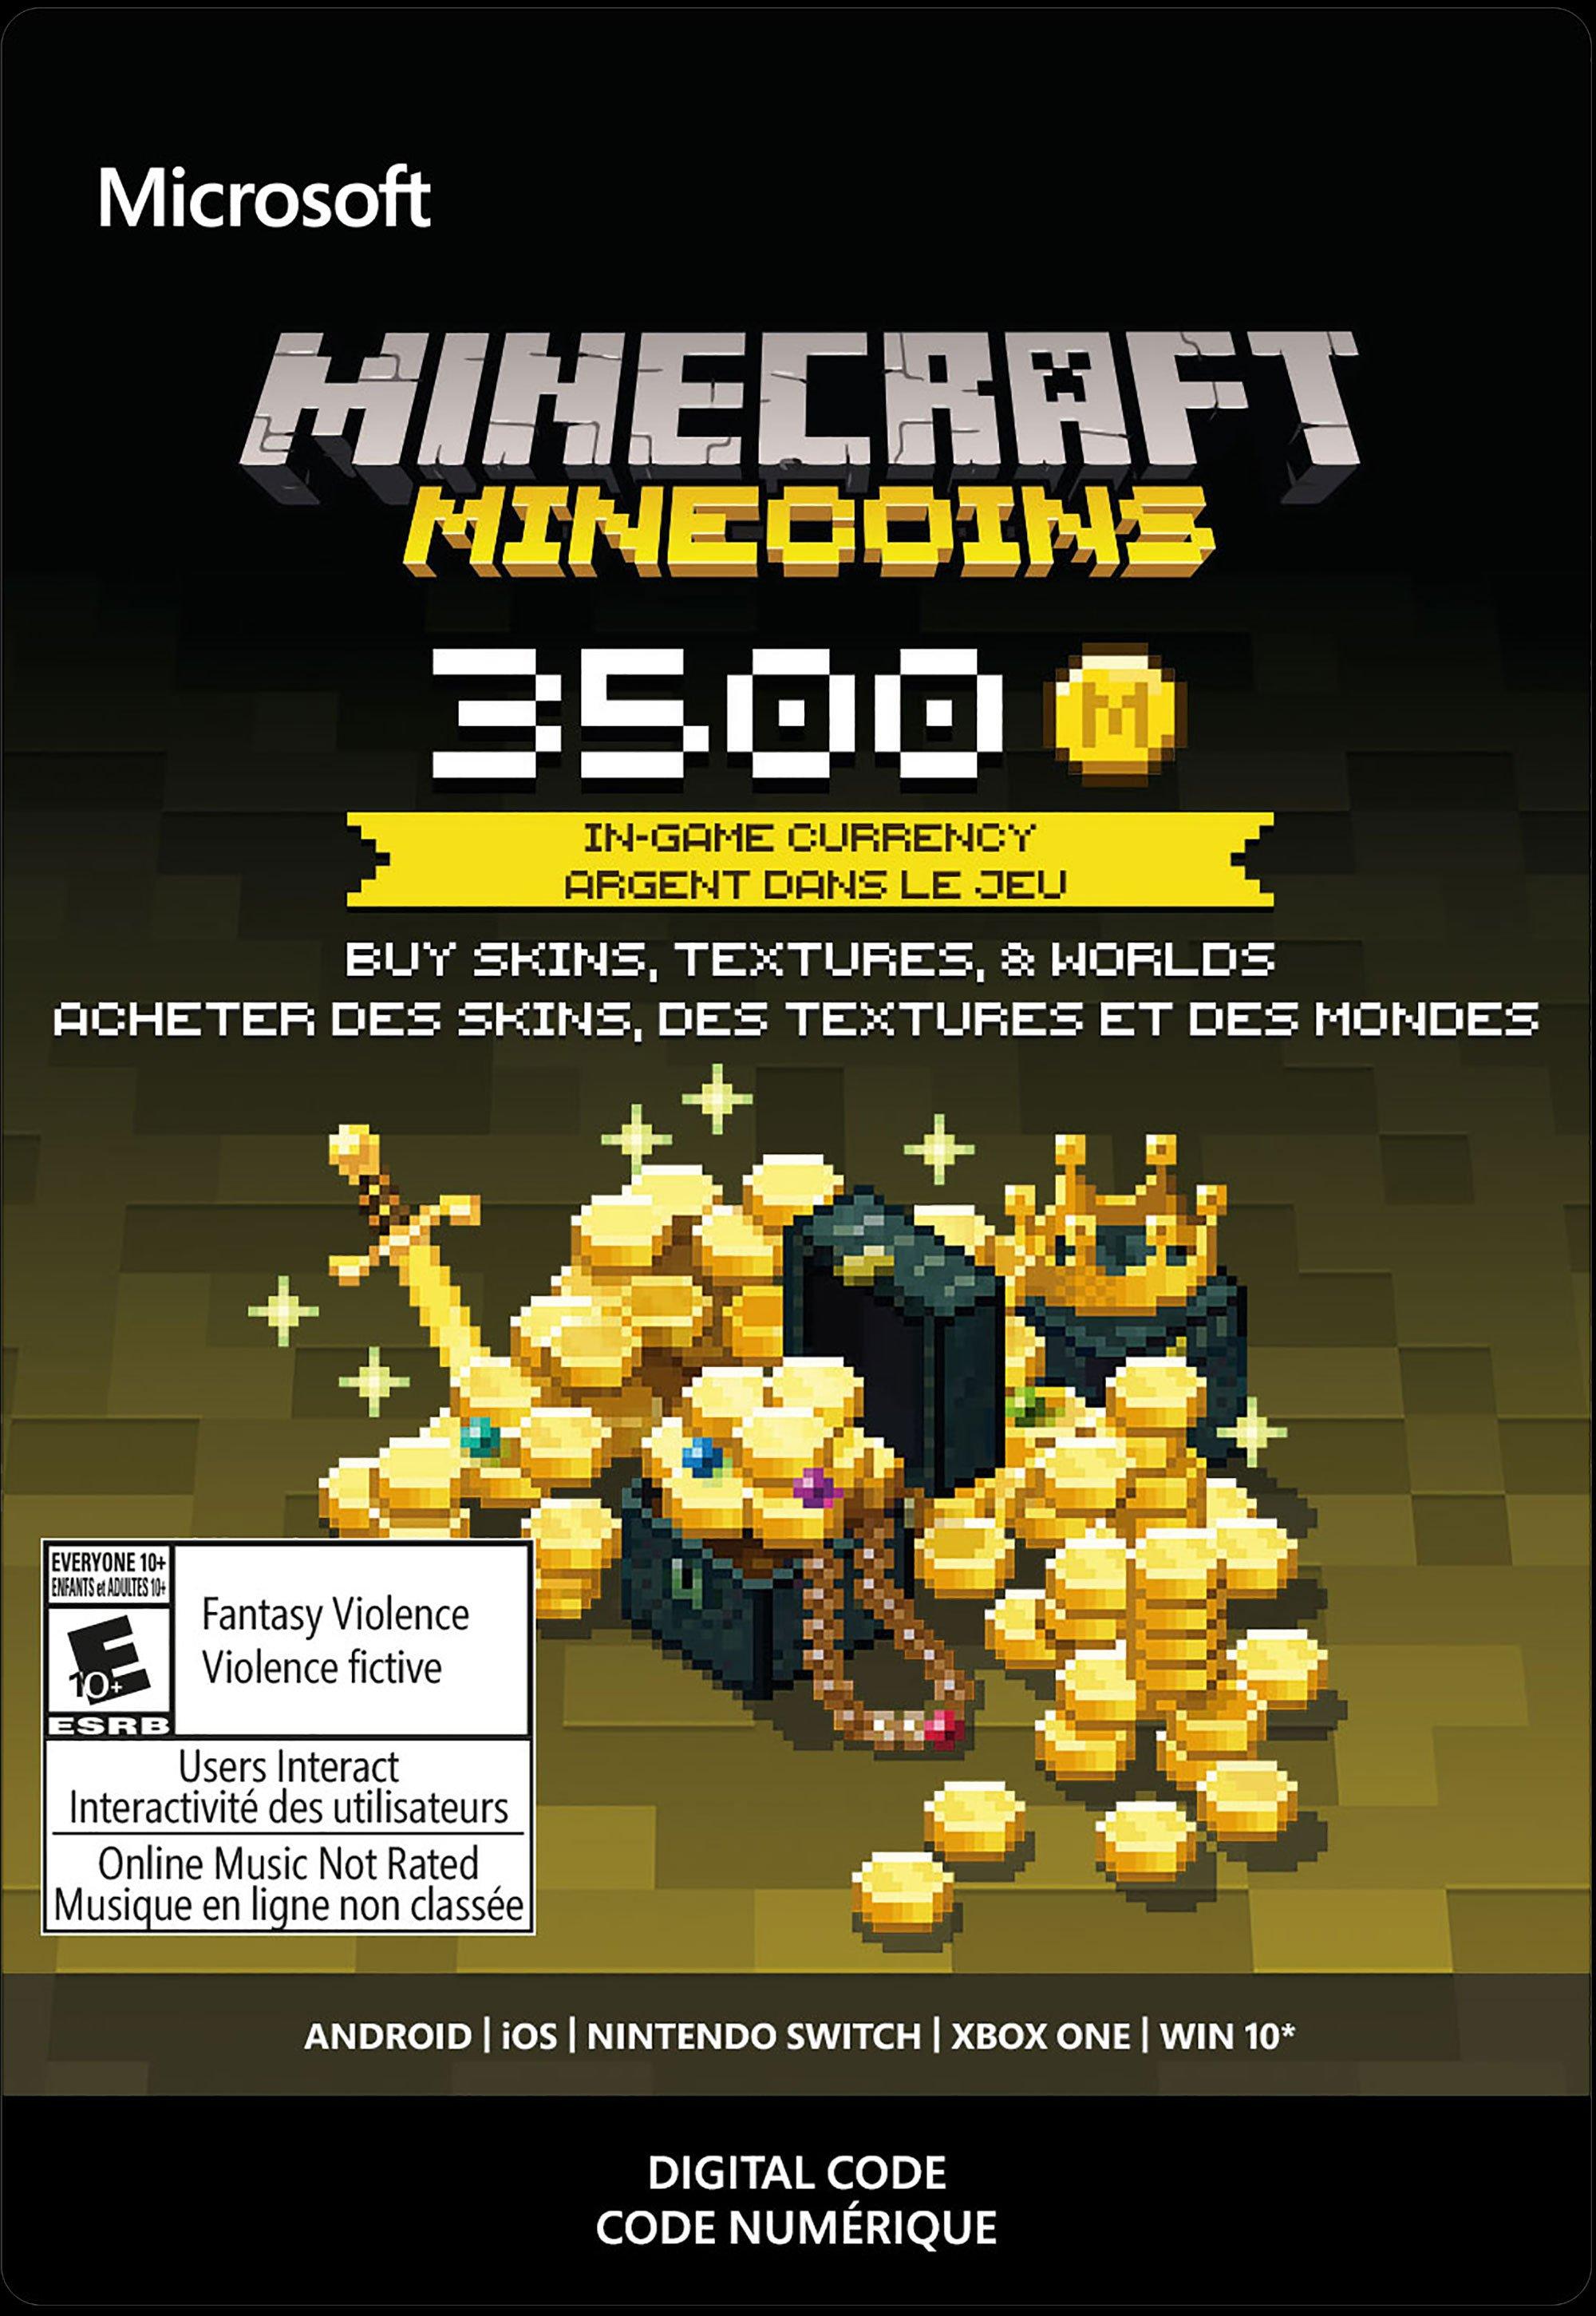 Minecraft 3,500 Minecoins - Xbox One